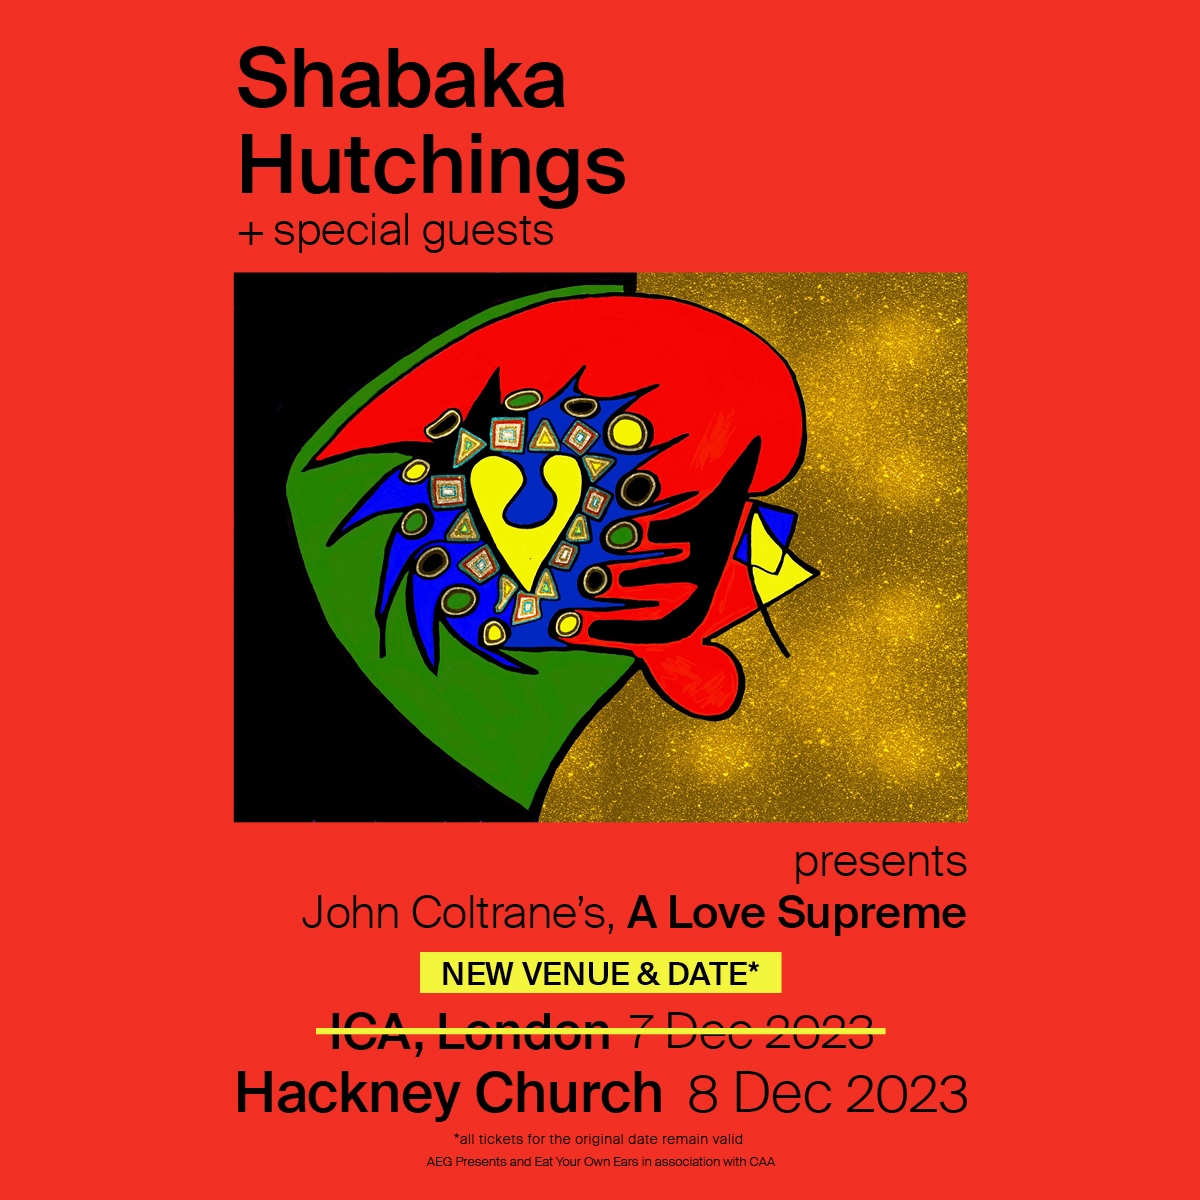 SHABAKA HUTCHINGS PRESENTS JOHN COLTRANE’S A LOVE SUPREME